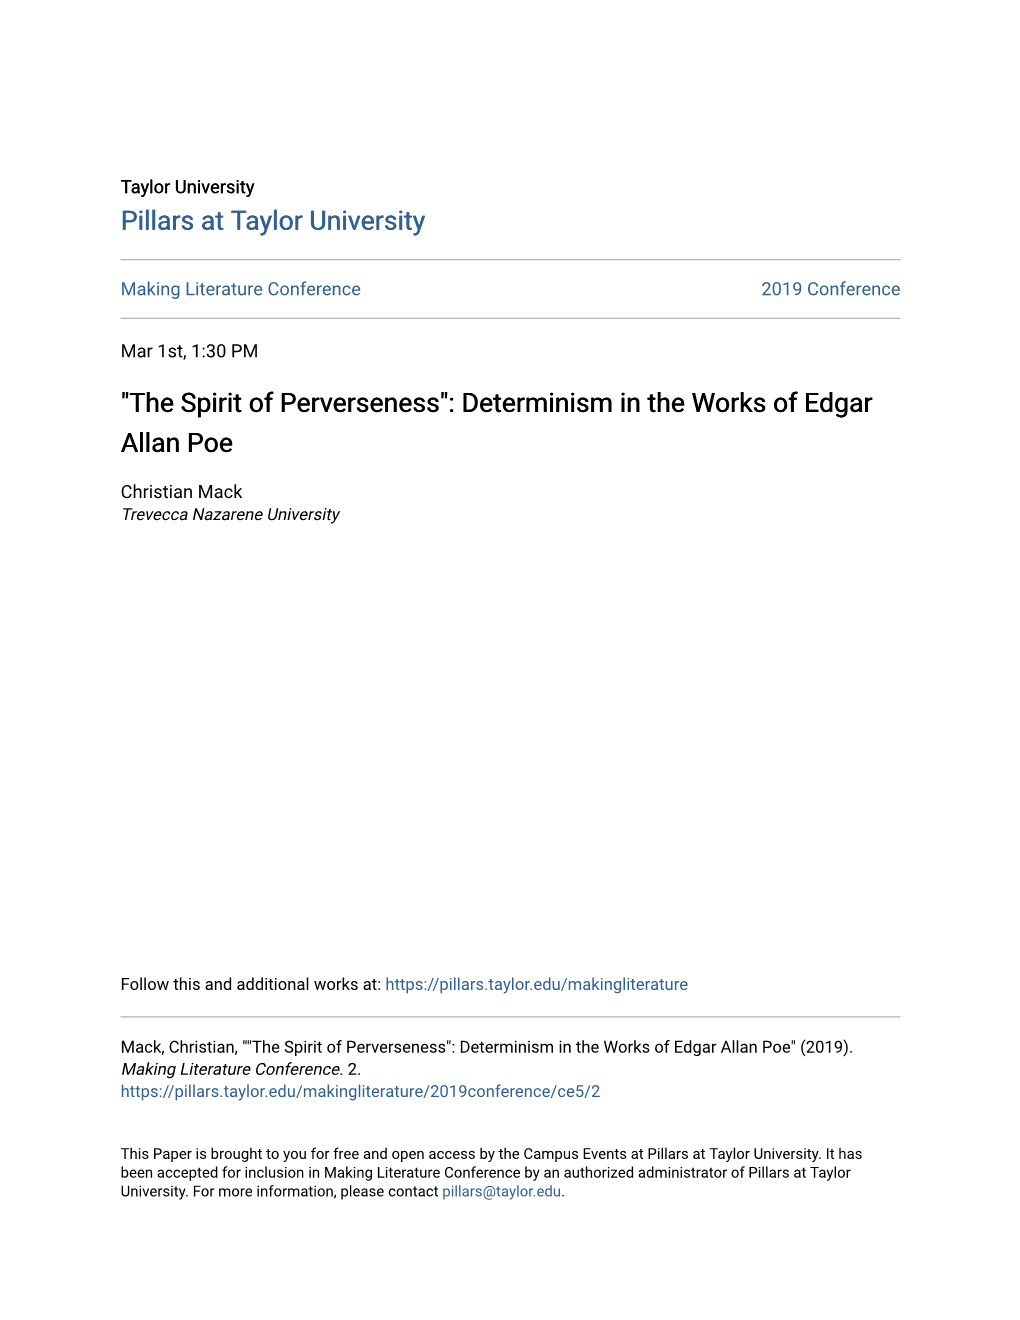 "The Spirit of Perverseness": Determinism in the Works of Edgar Allan Poe